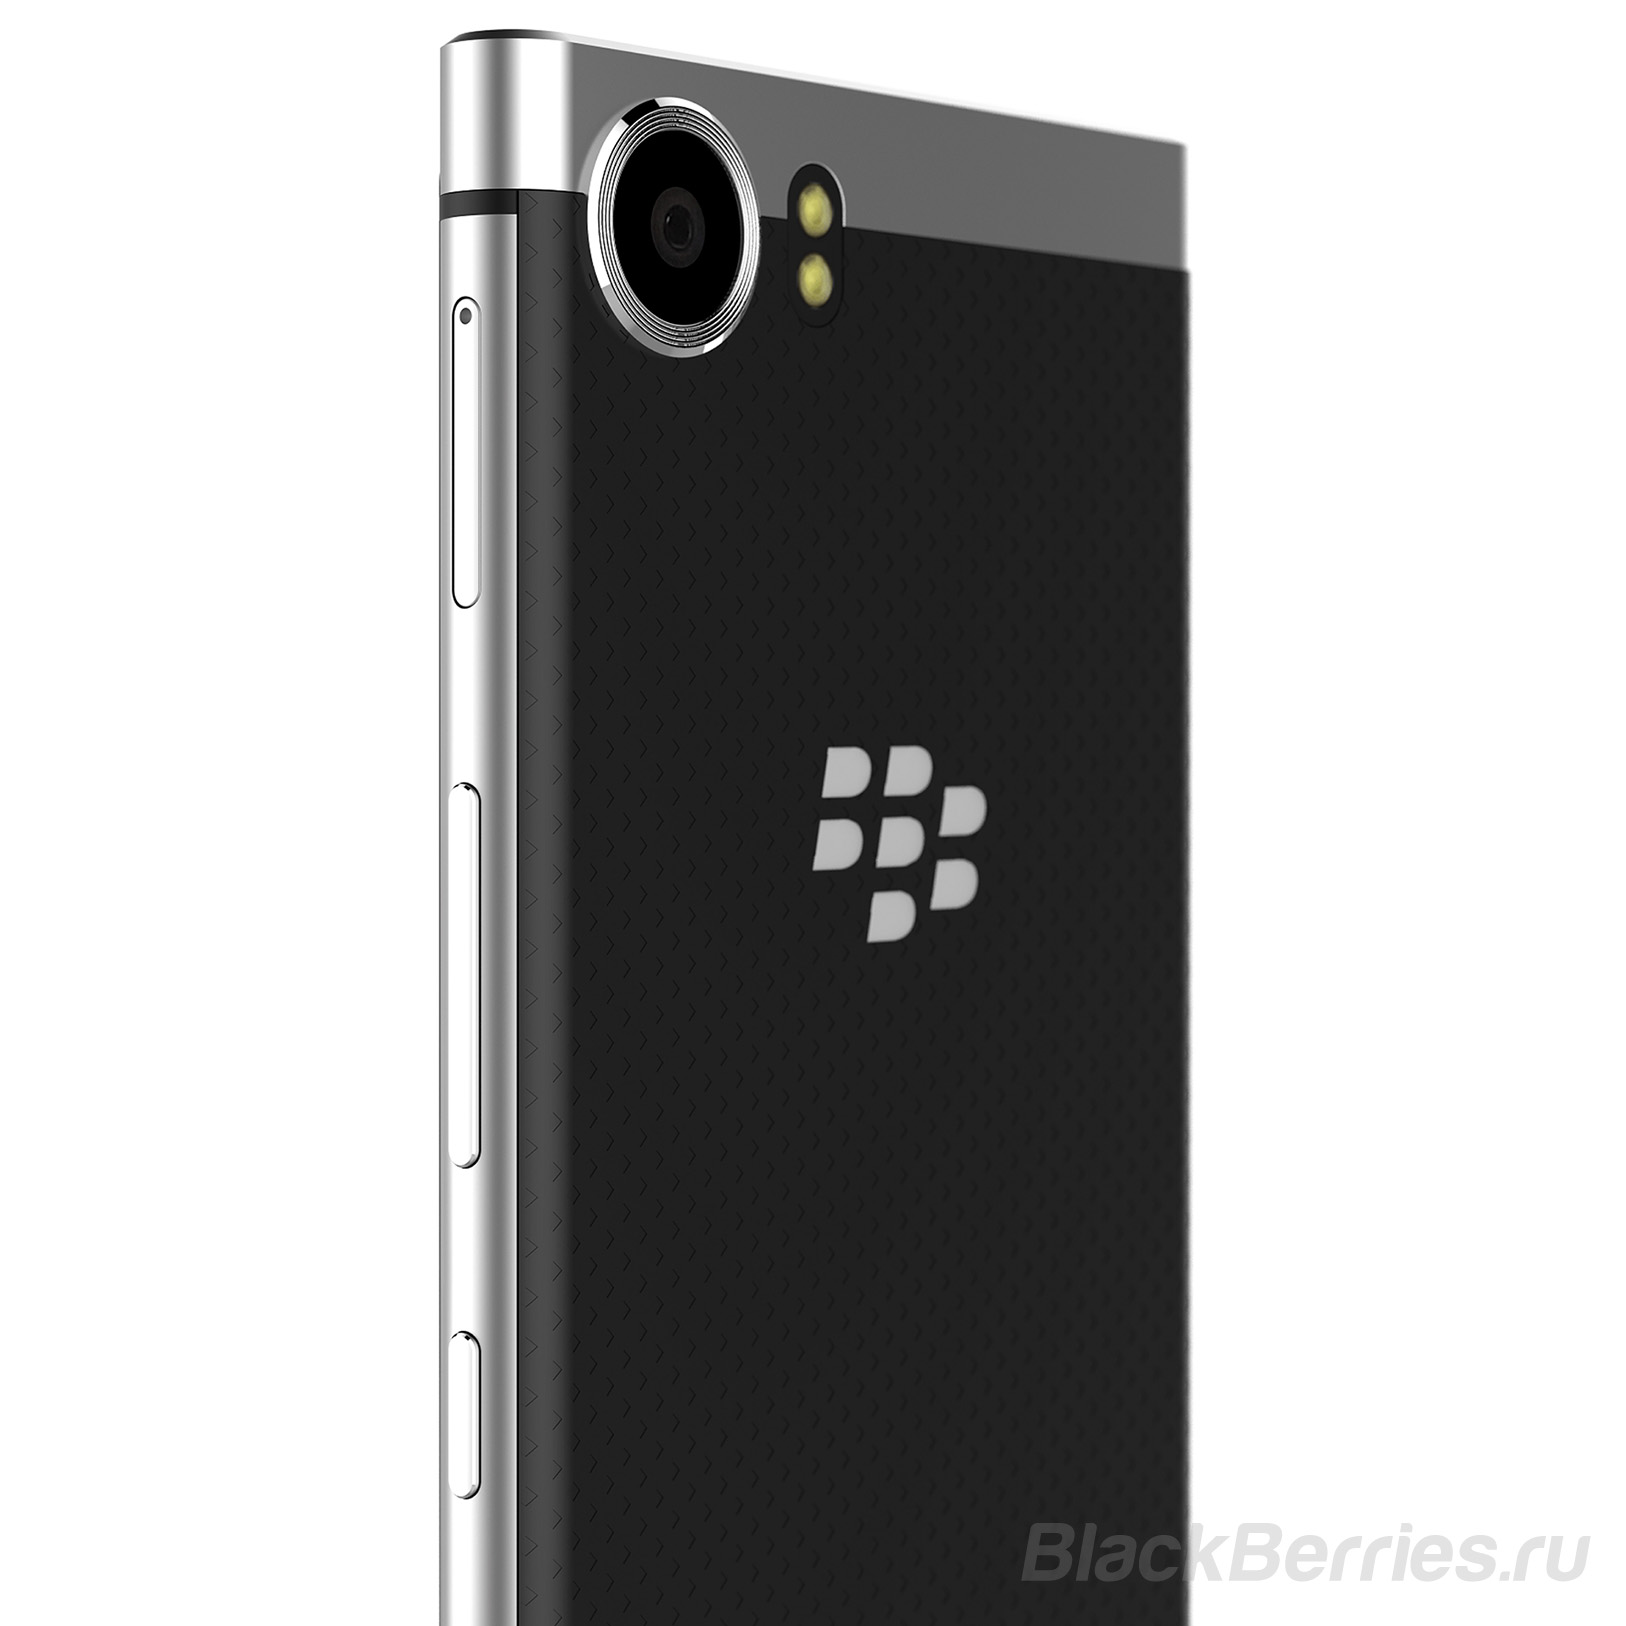 New-BlackBerry-Smartphone_Back-side